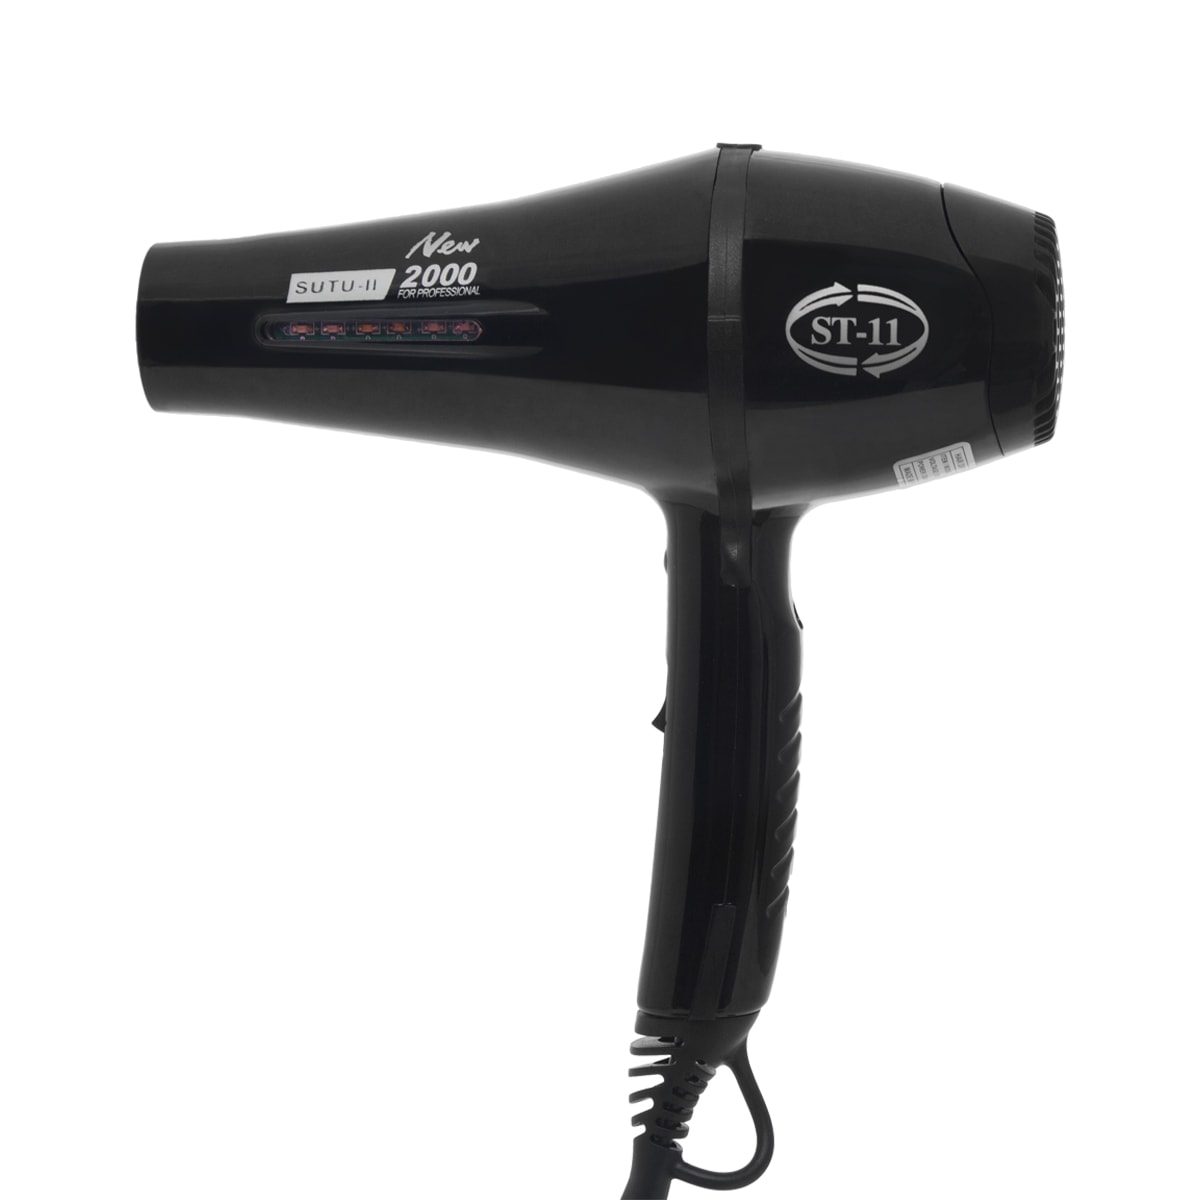 Sutu-II-3-hair dryer-pengering rambut-styling tools-salon